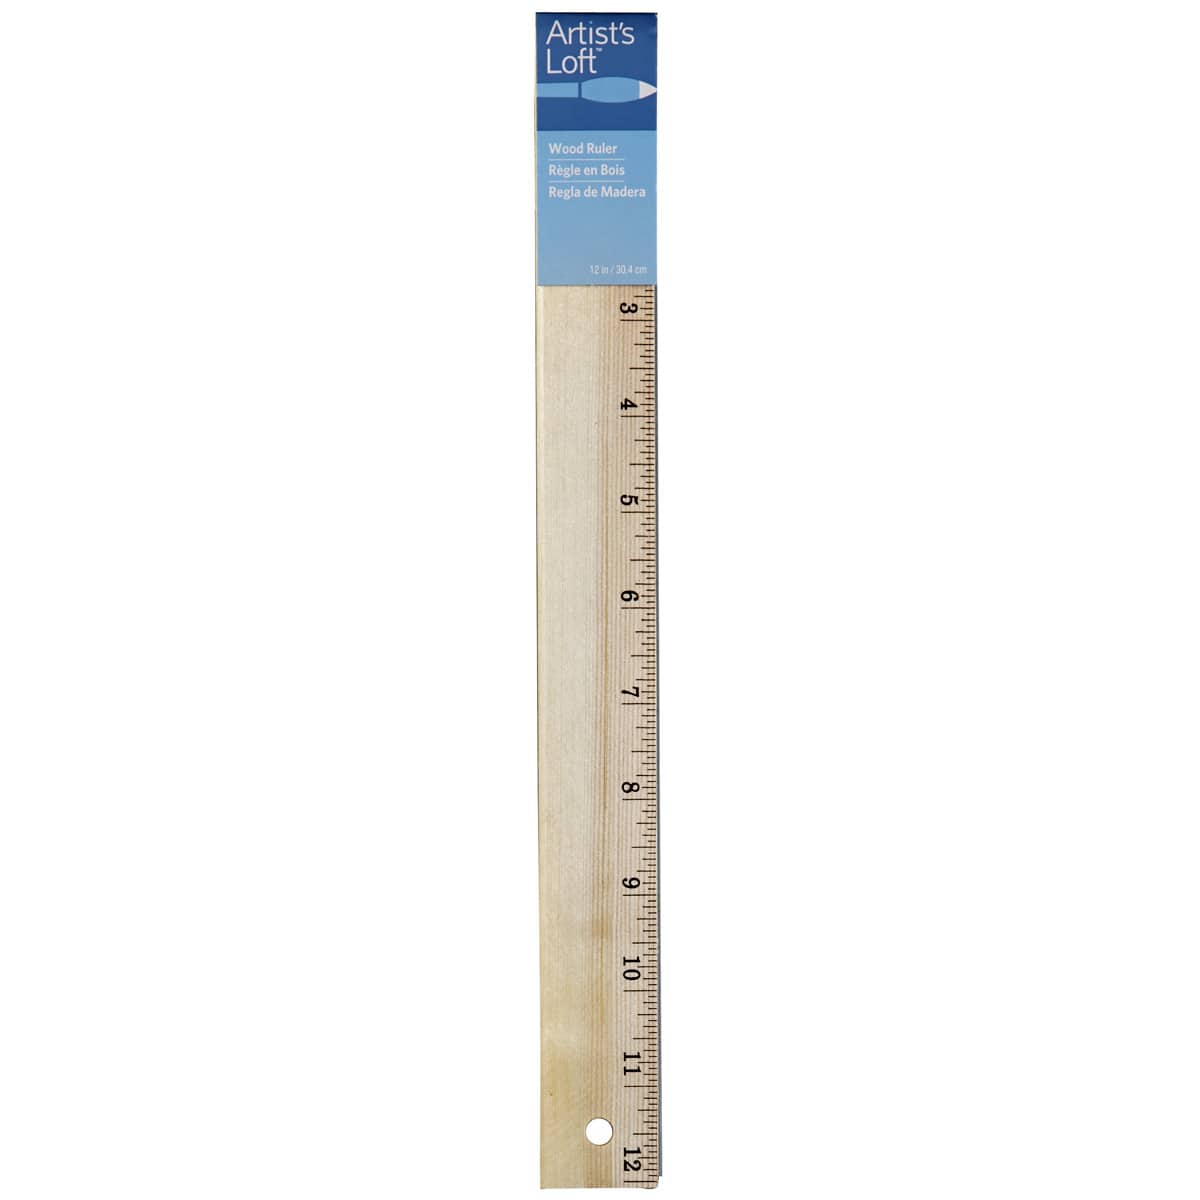 Net Loft six inch wooden ruler